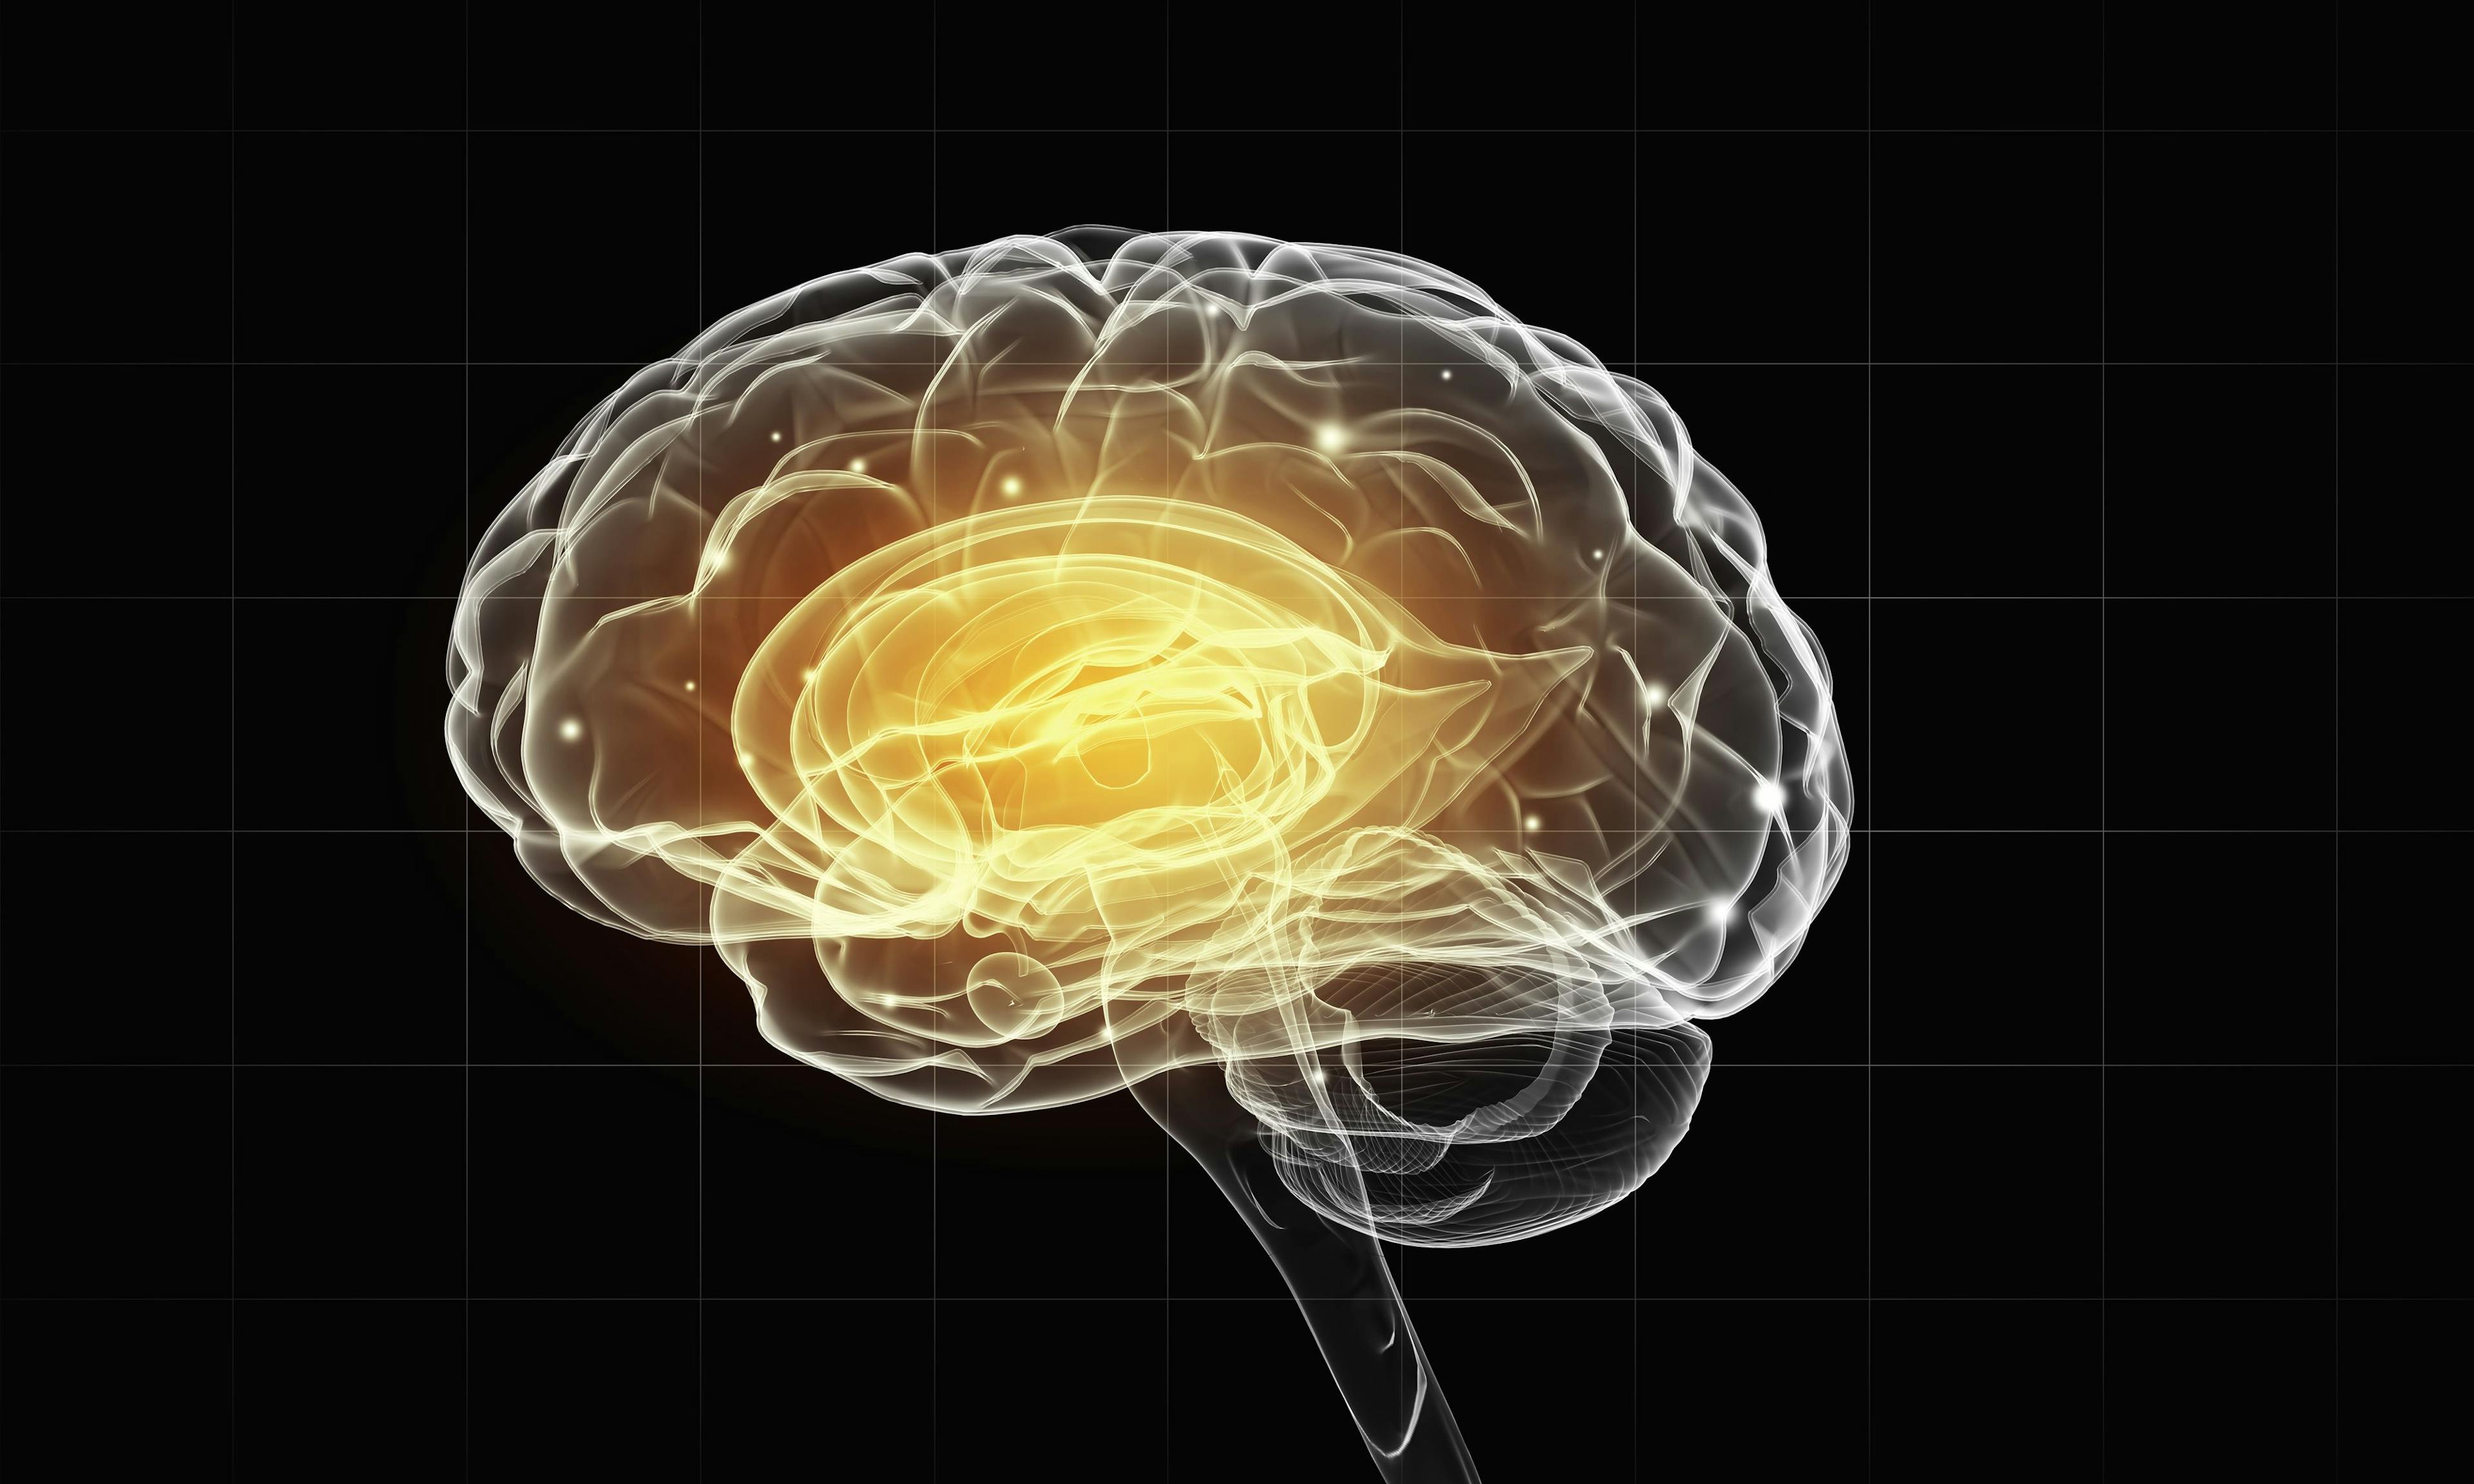 Human brain: ©Sergey Nivens - stock.adobe.com